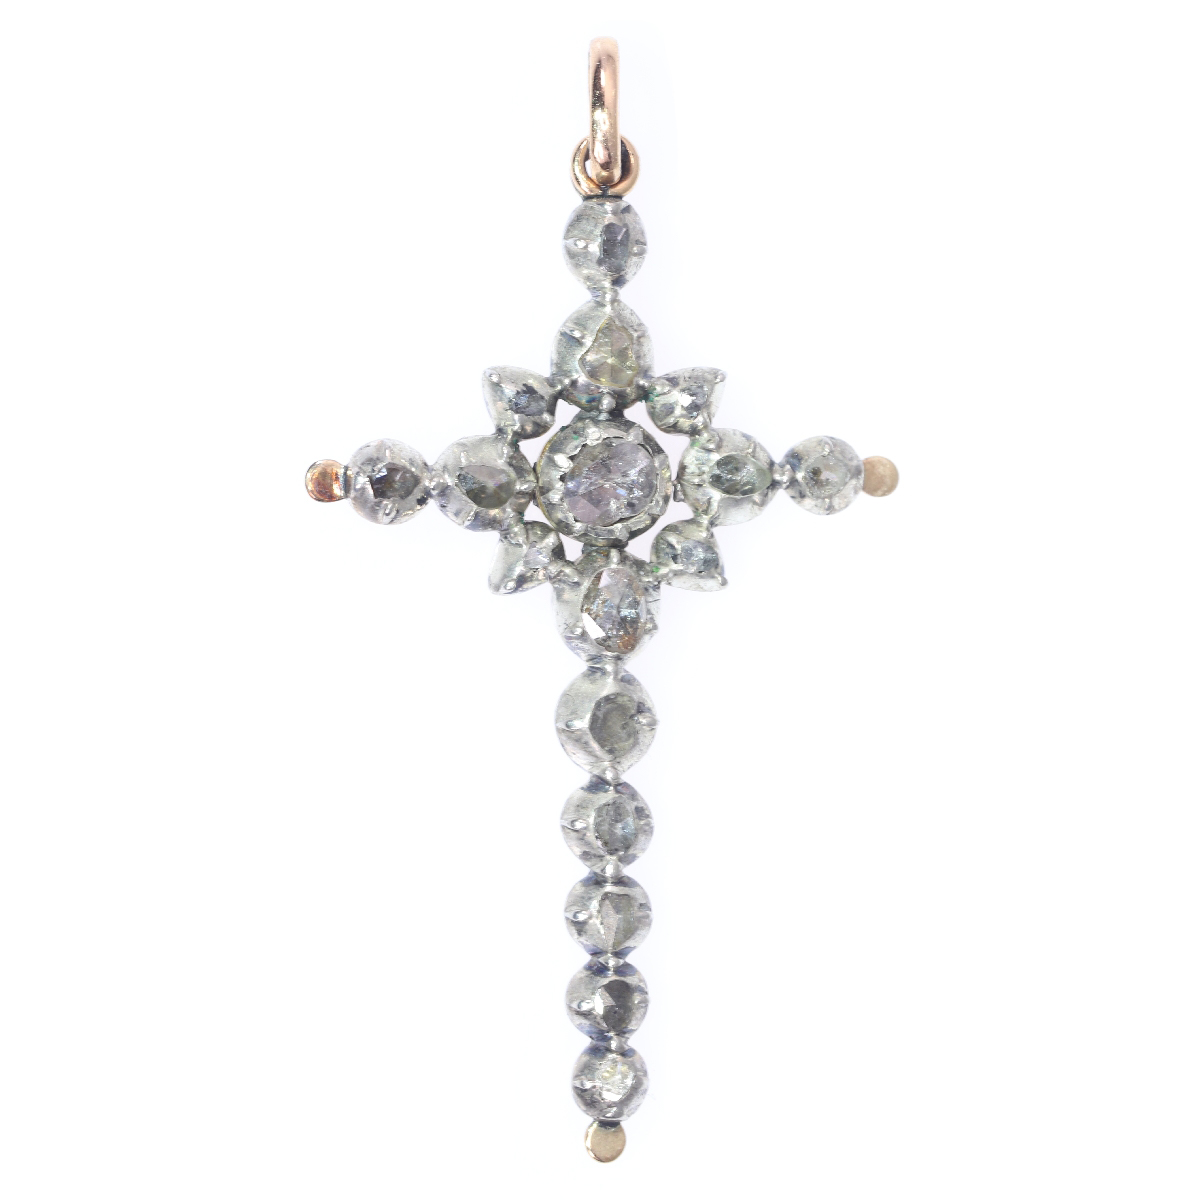 Victorian rose cut diamond cross pendant